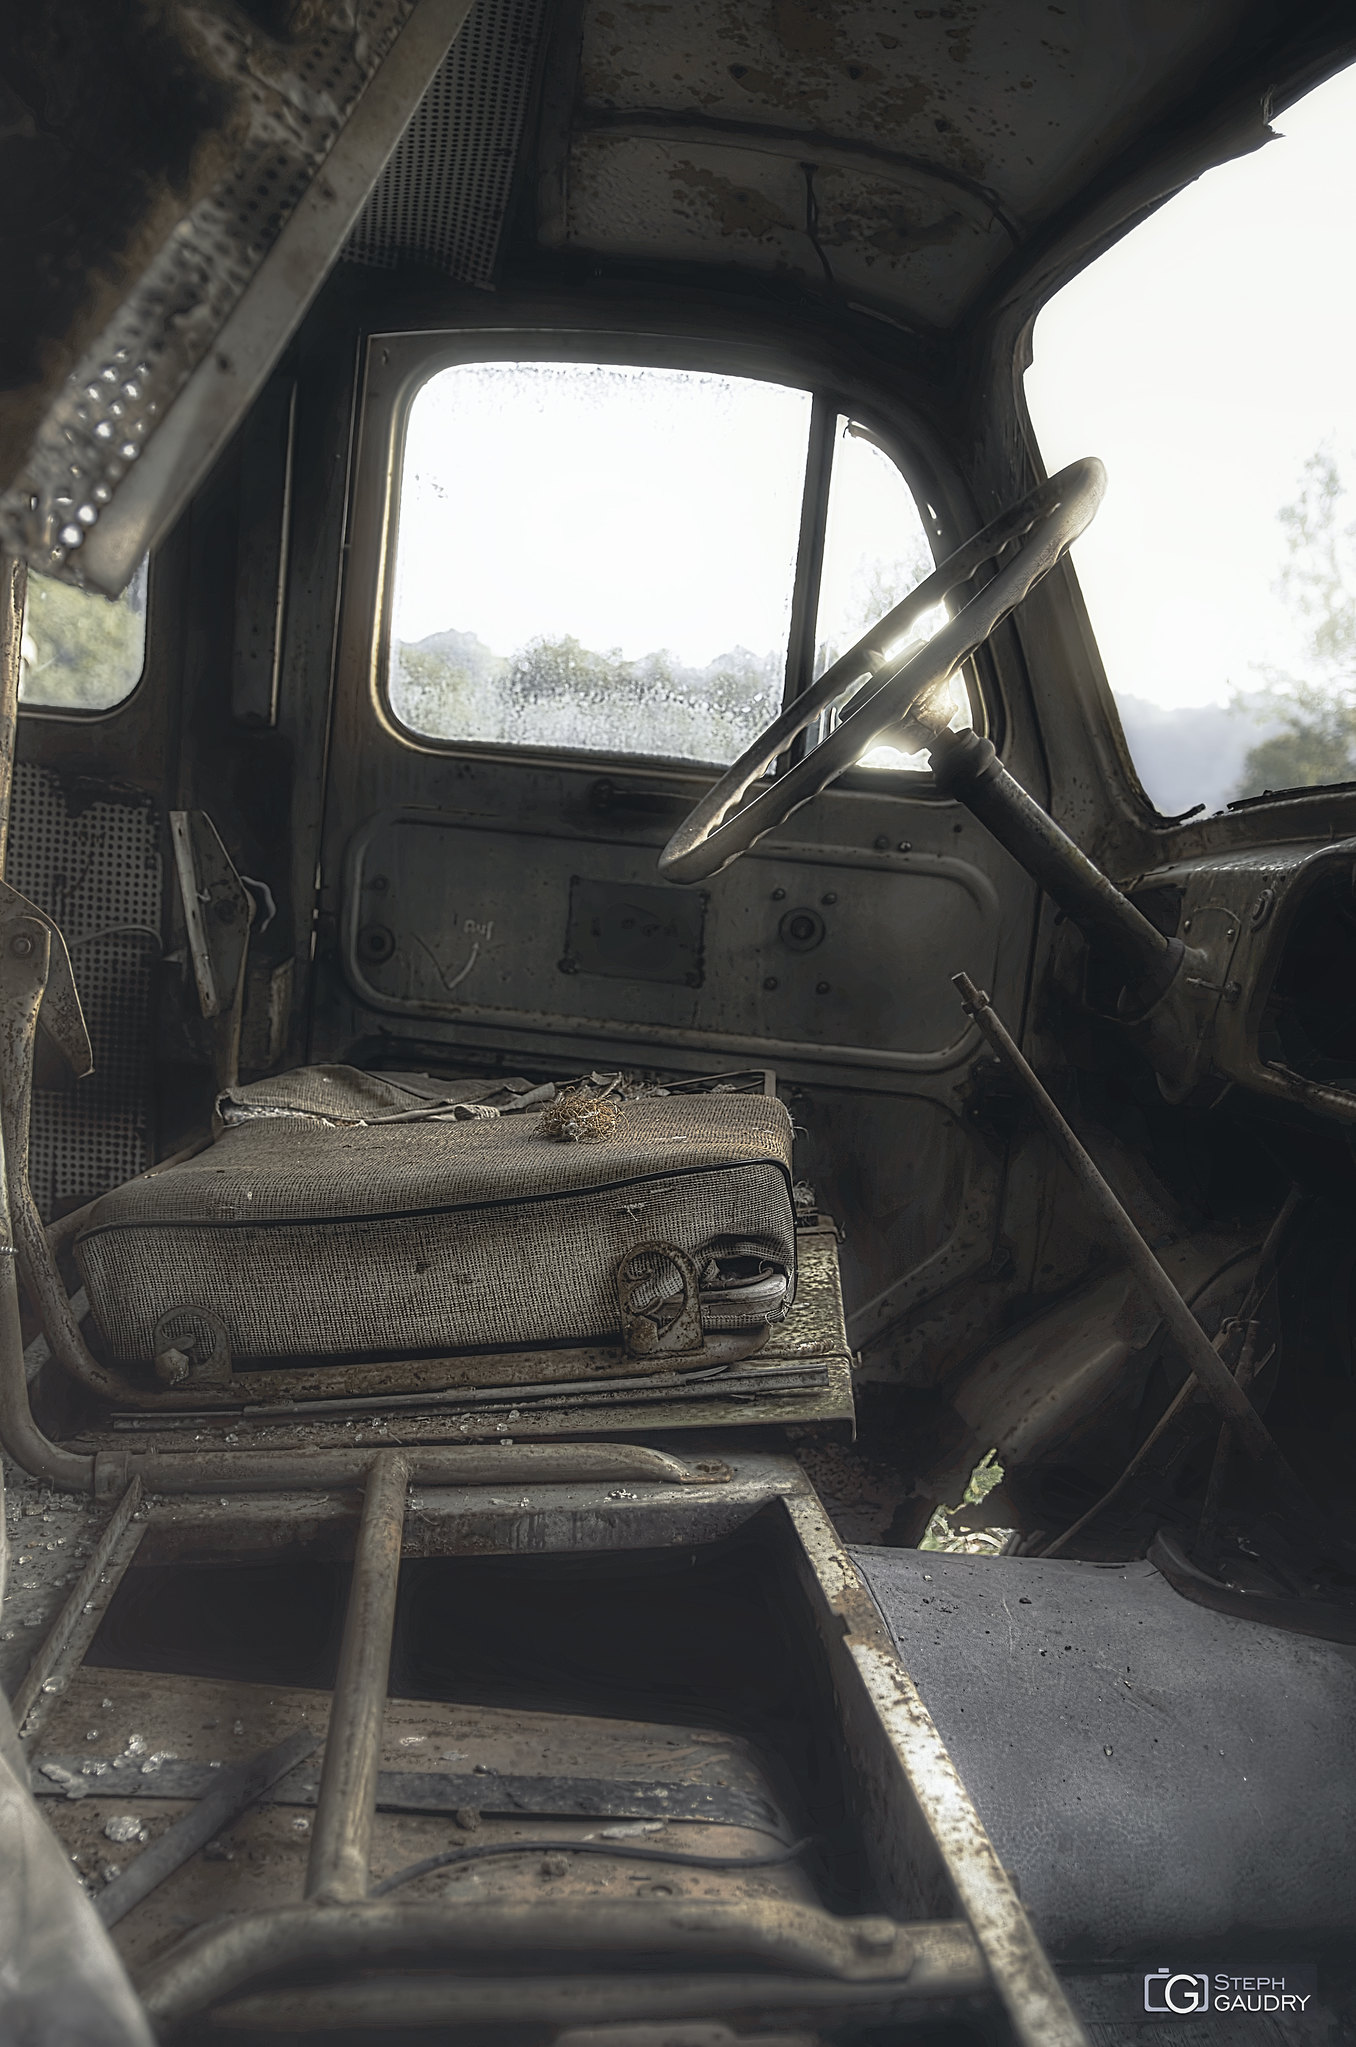 Abandoned firetruck cabin [Click to start slideshow]